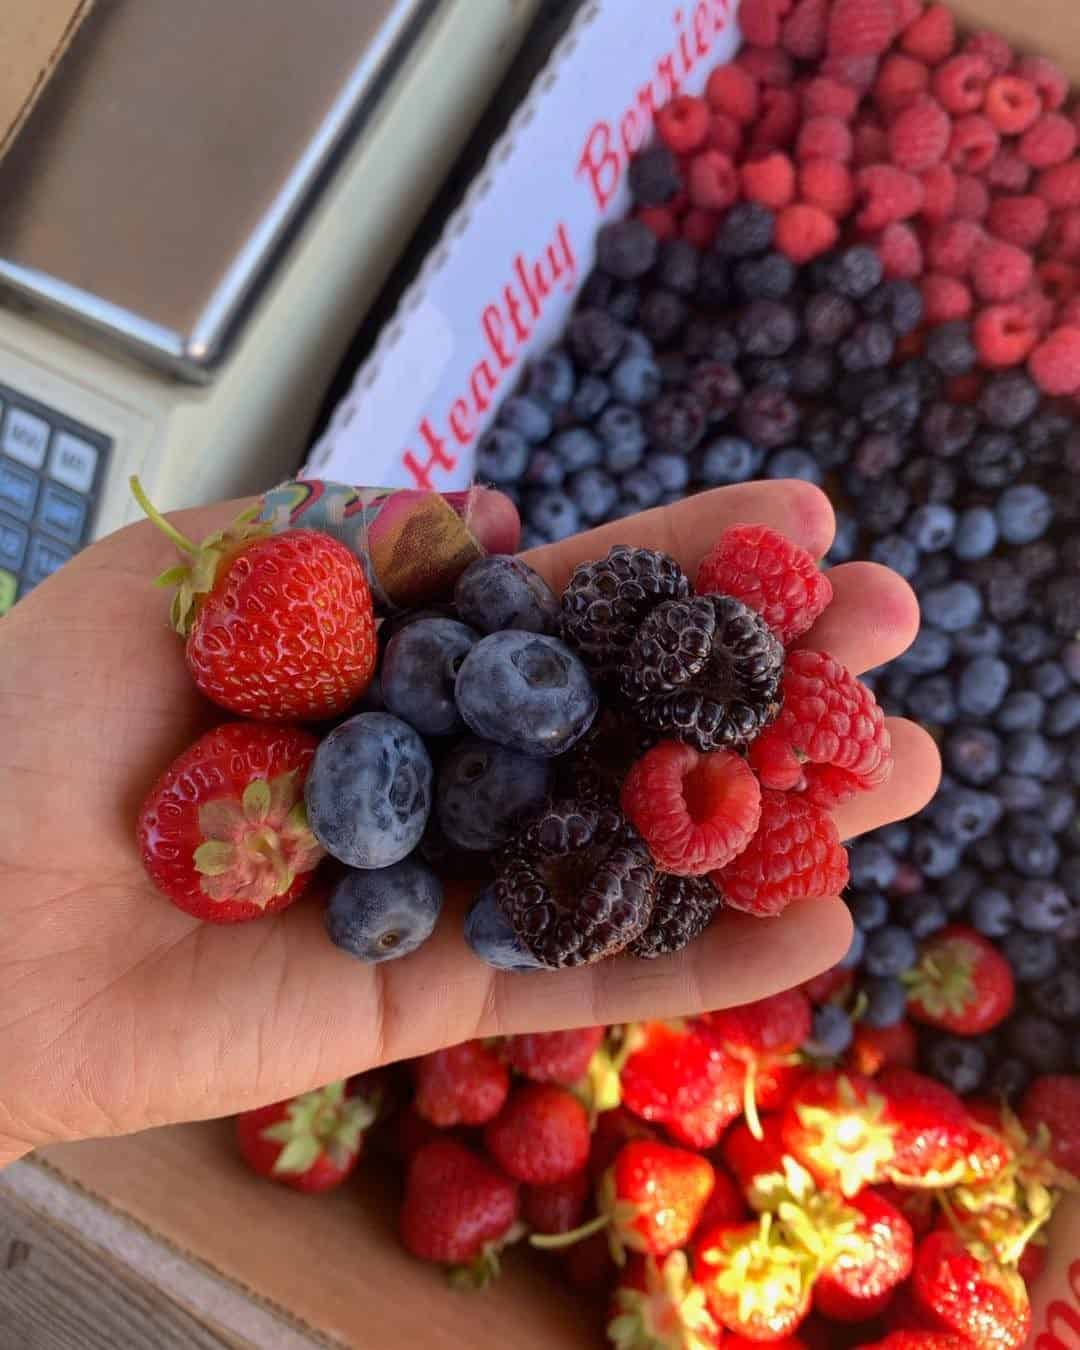 Dutton Berry Farm - Raspberries and Blueberries